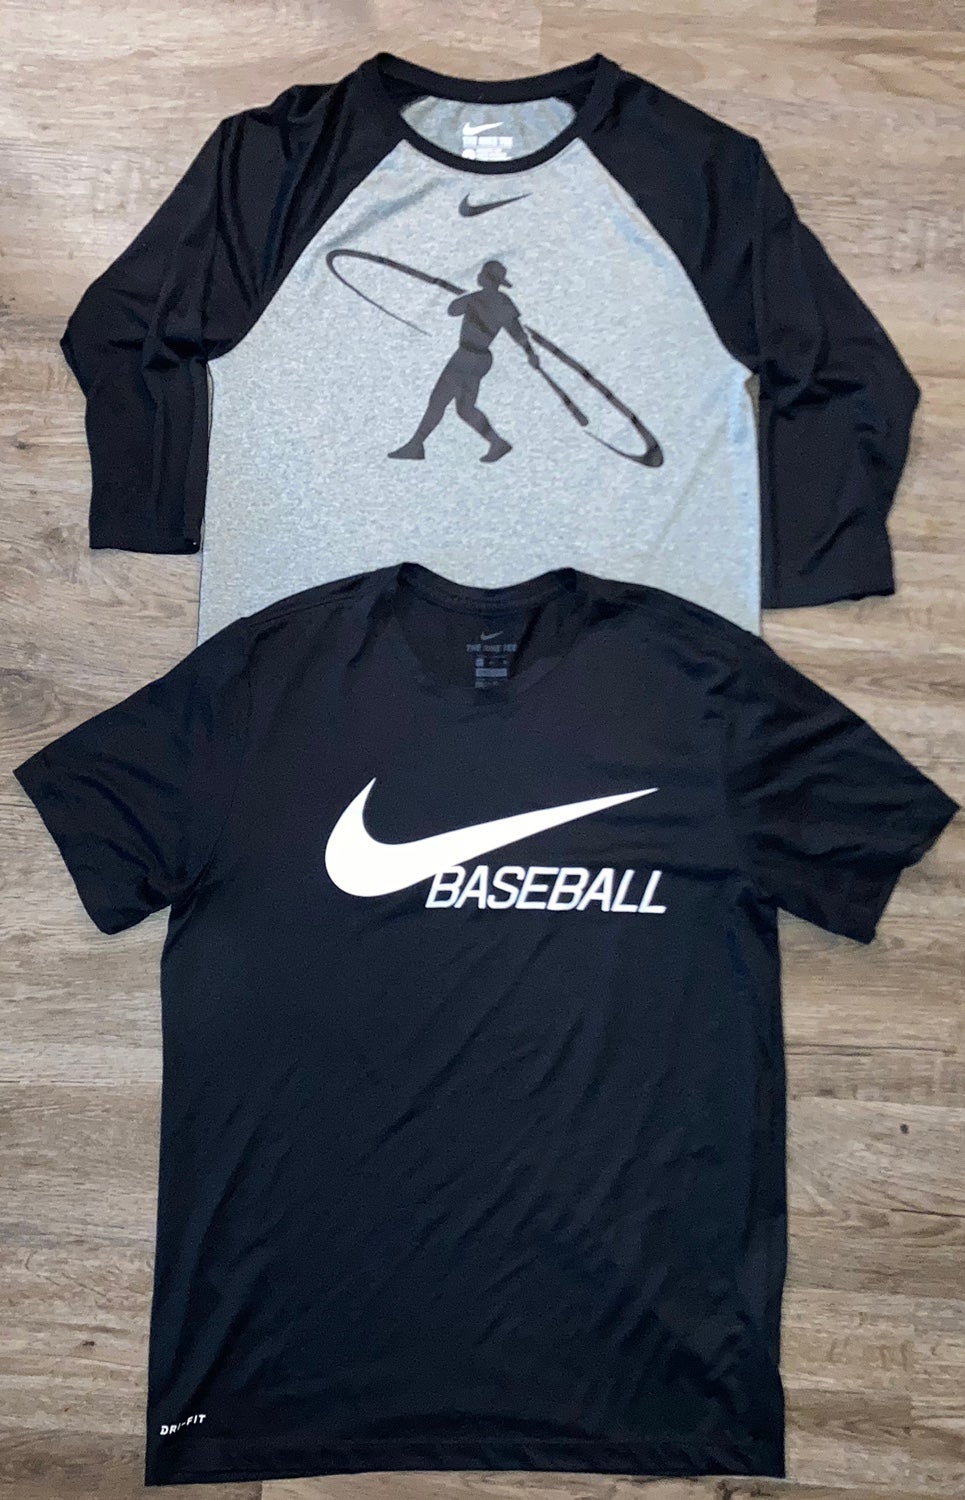 Small/Medium) 2 New Nike Baseball Dri-FIT Shirts